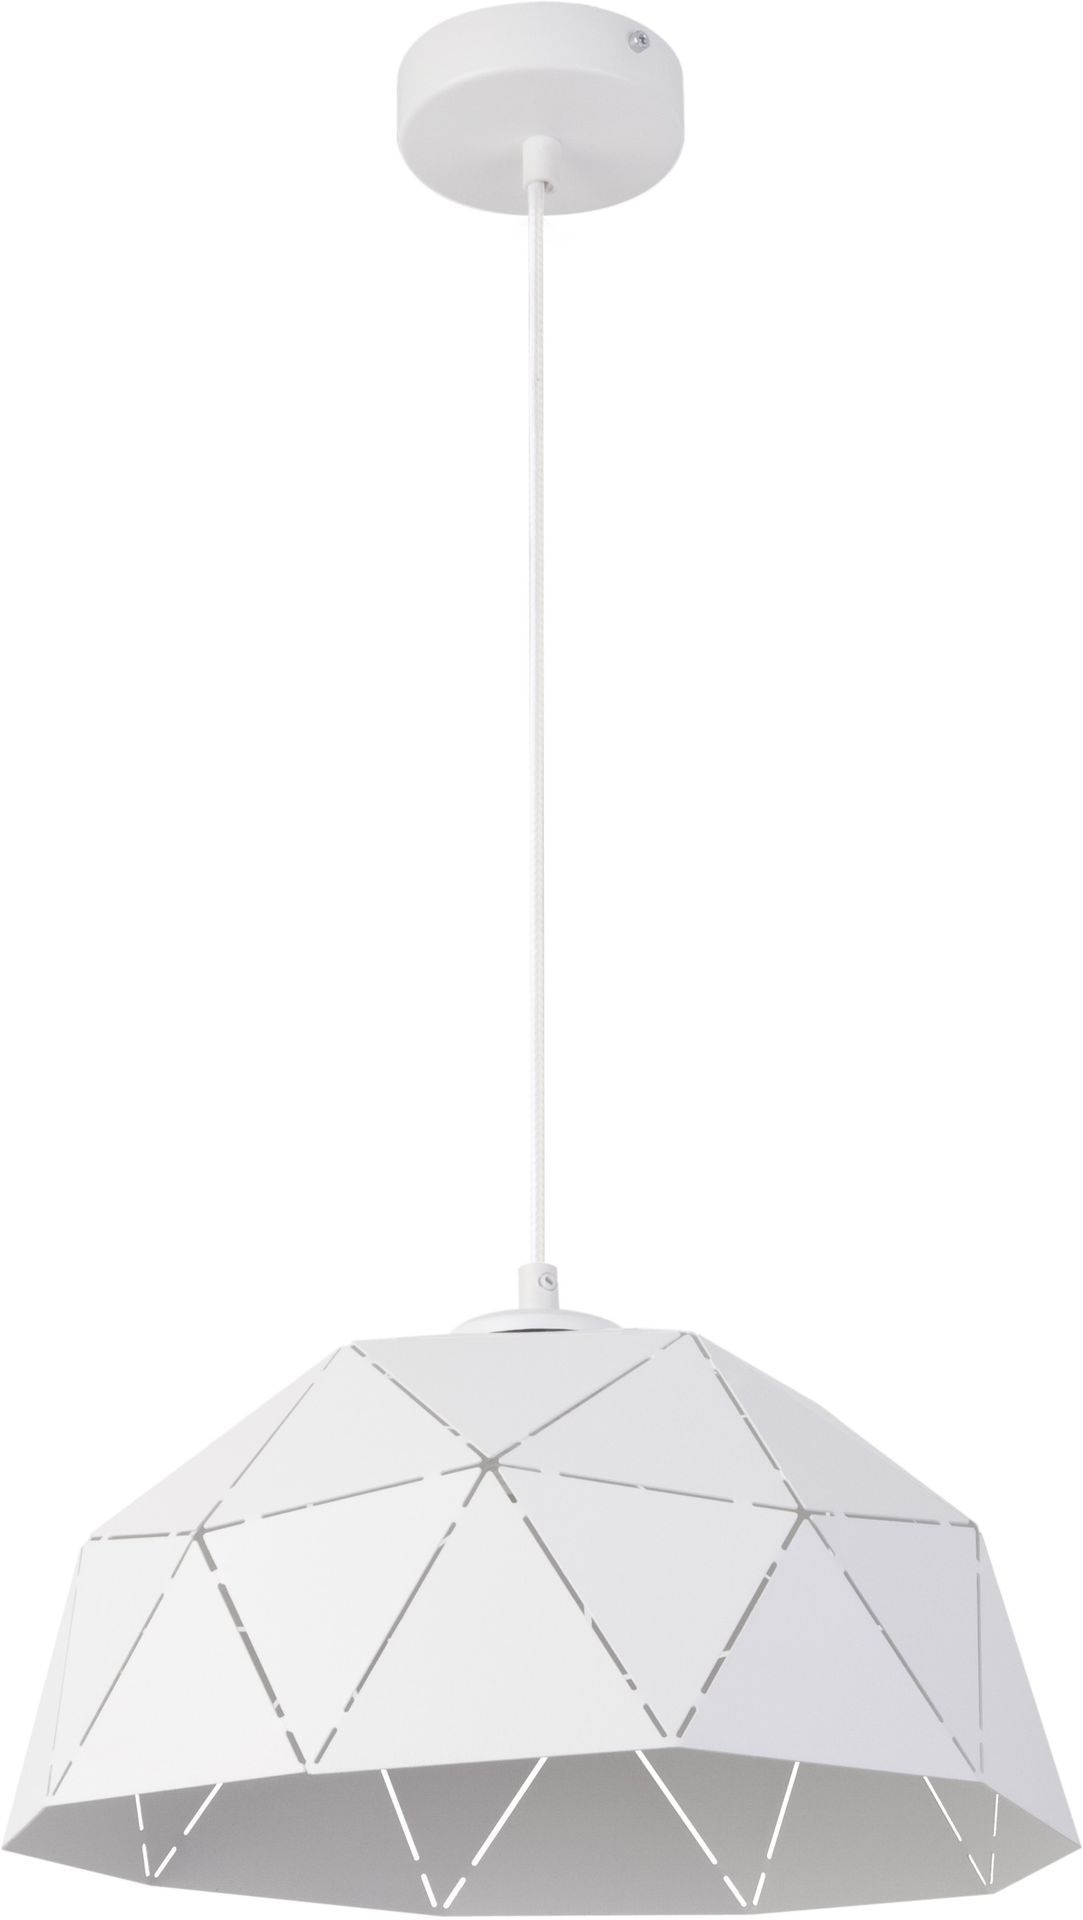 Lampa wisząca Origami S 1 x 60 W E27 biała Lampa wisząca Origami S 1 x 60 W E27 biała (31613)